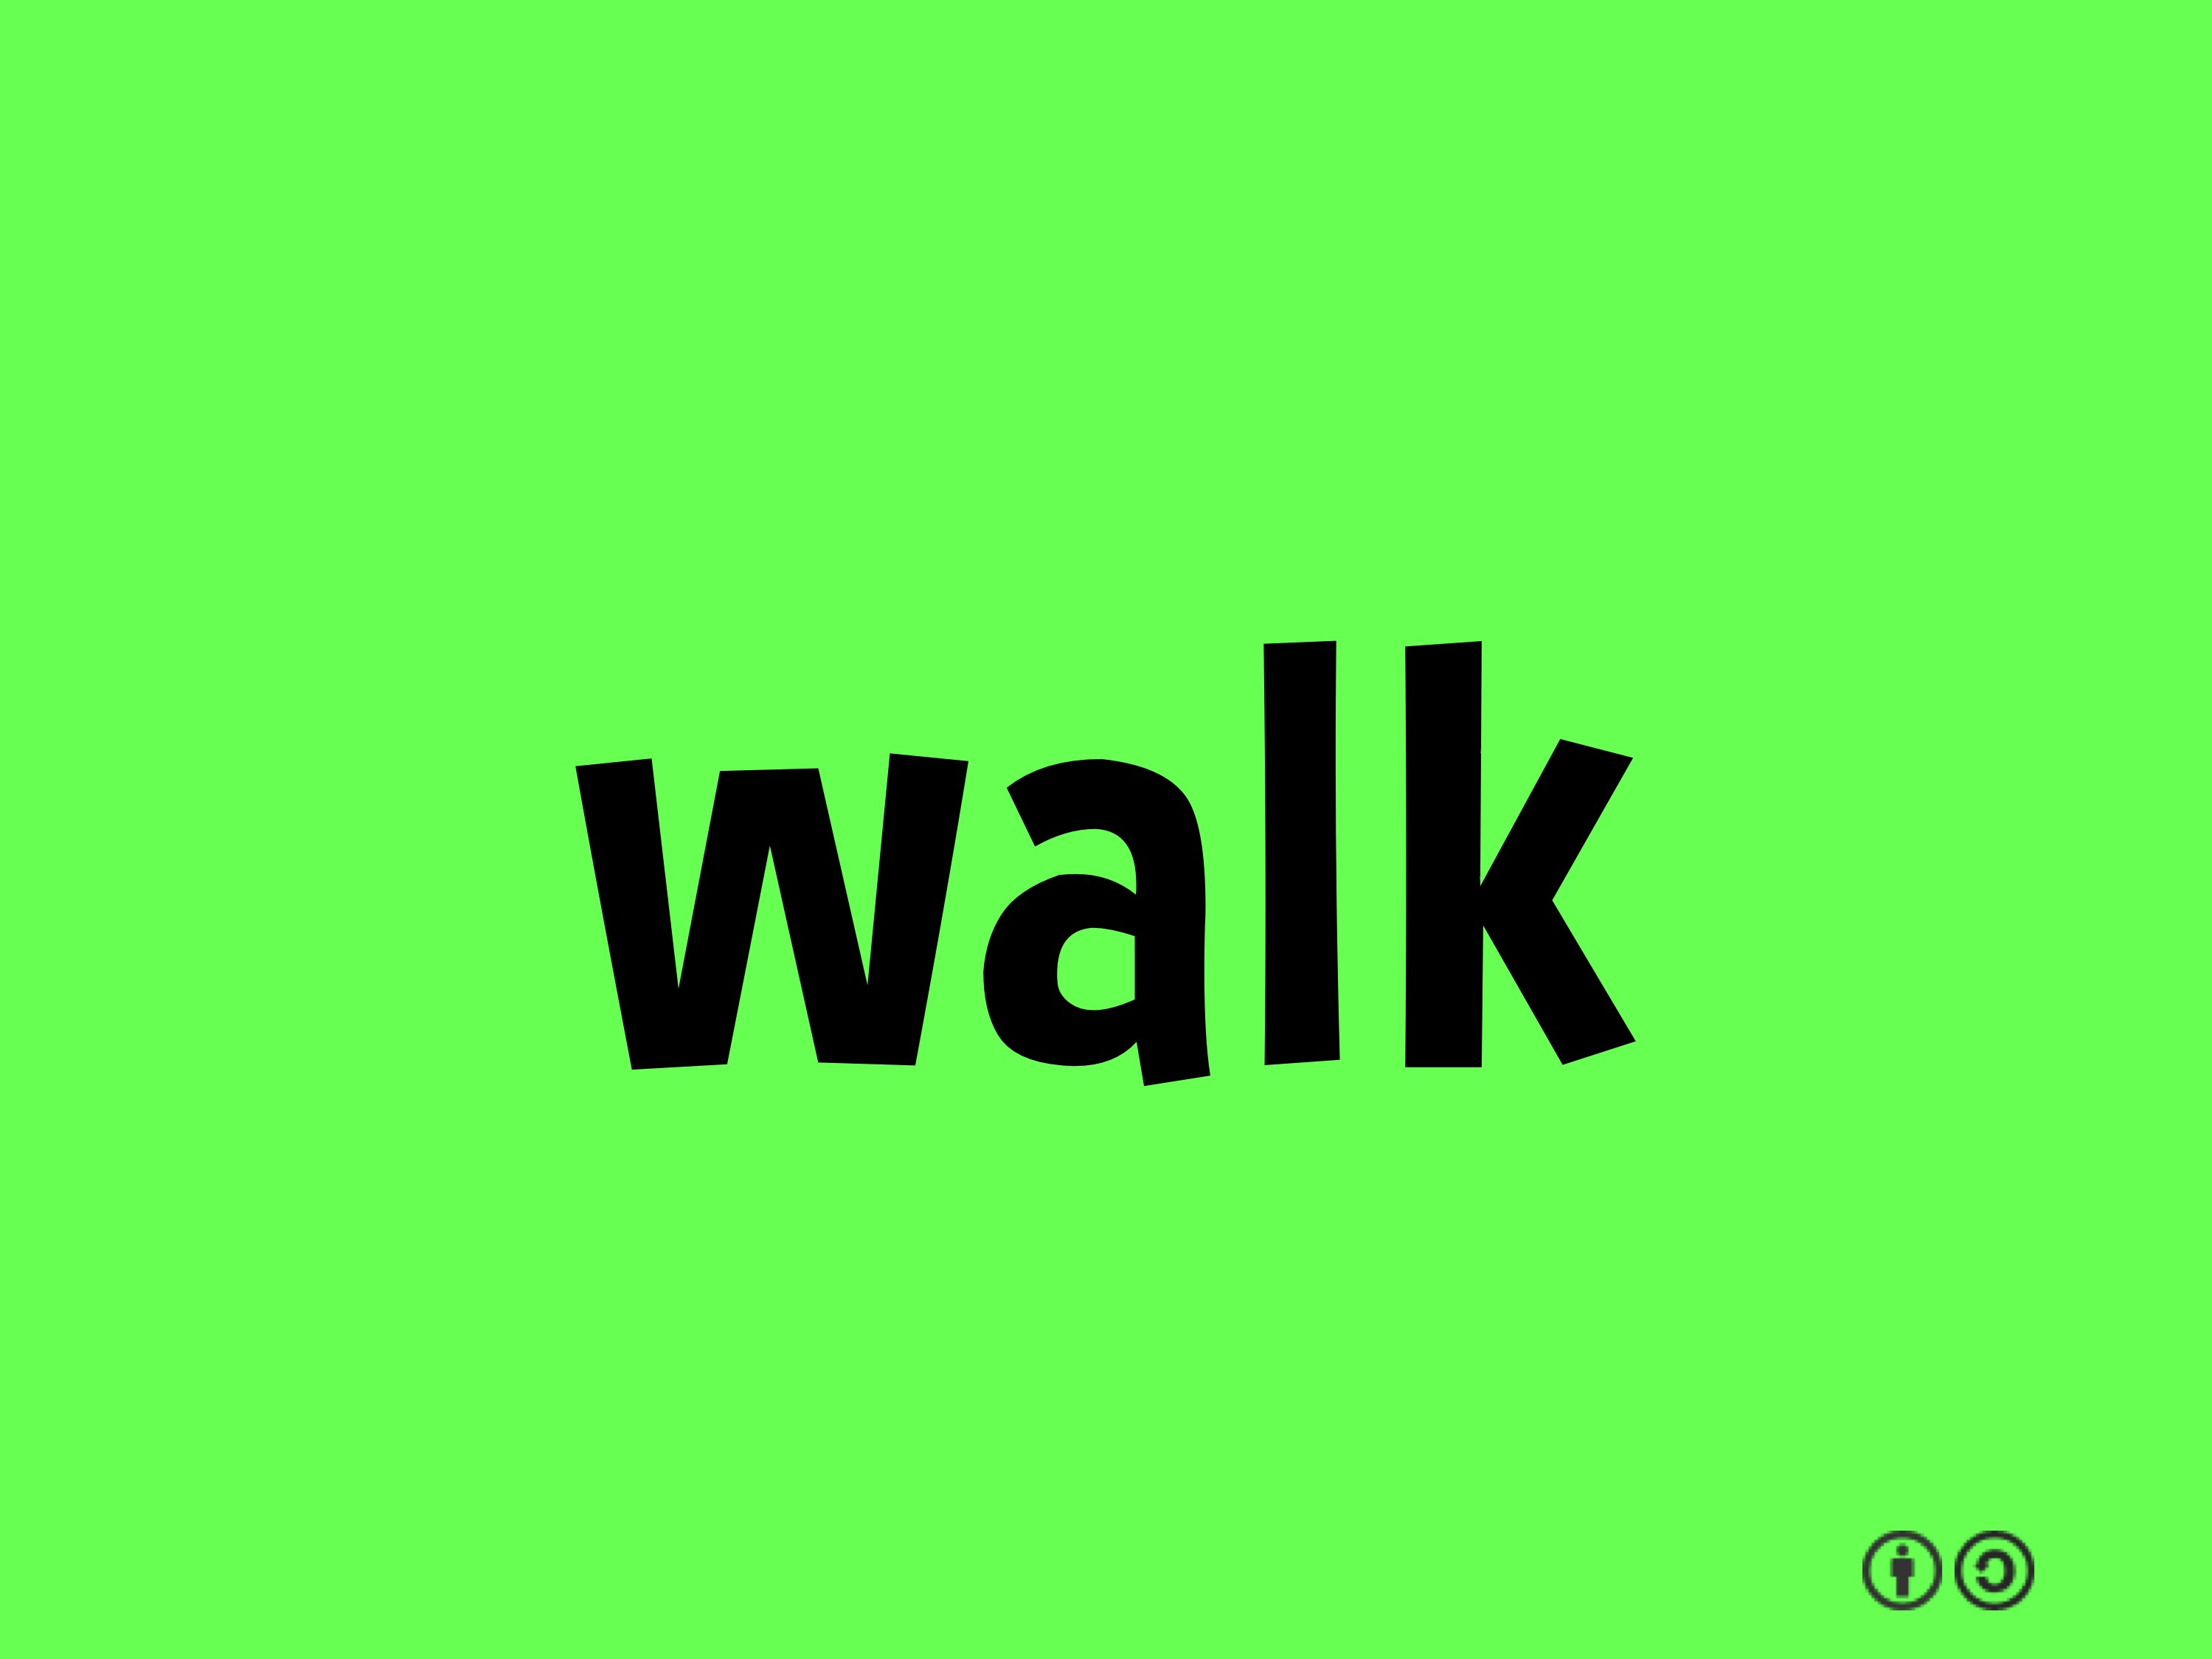 francesco careri walkscapes walking as an aesthetic practice